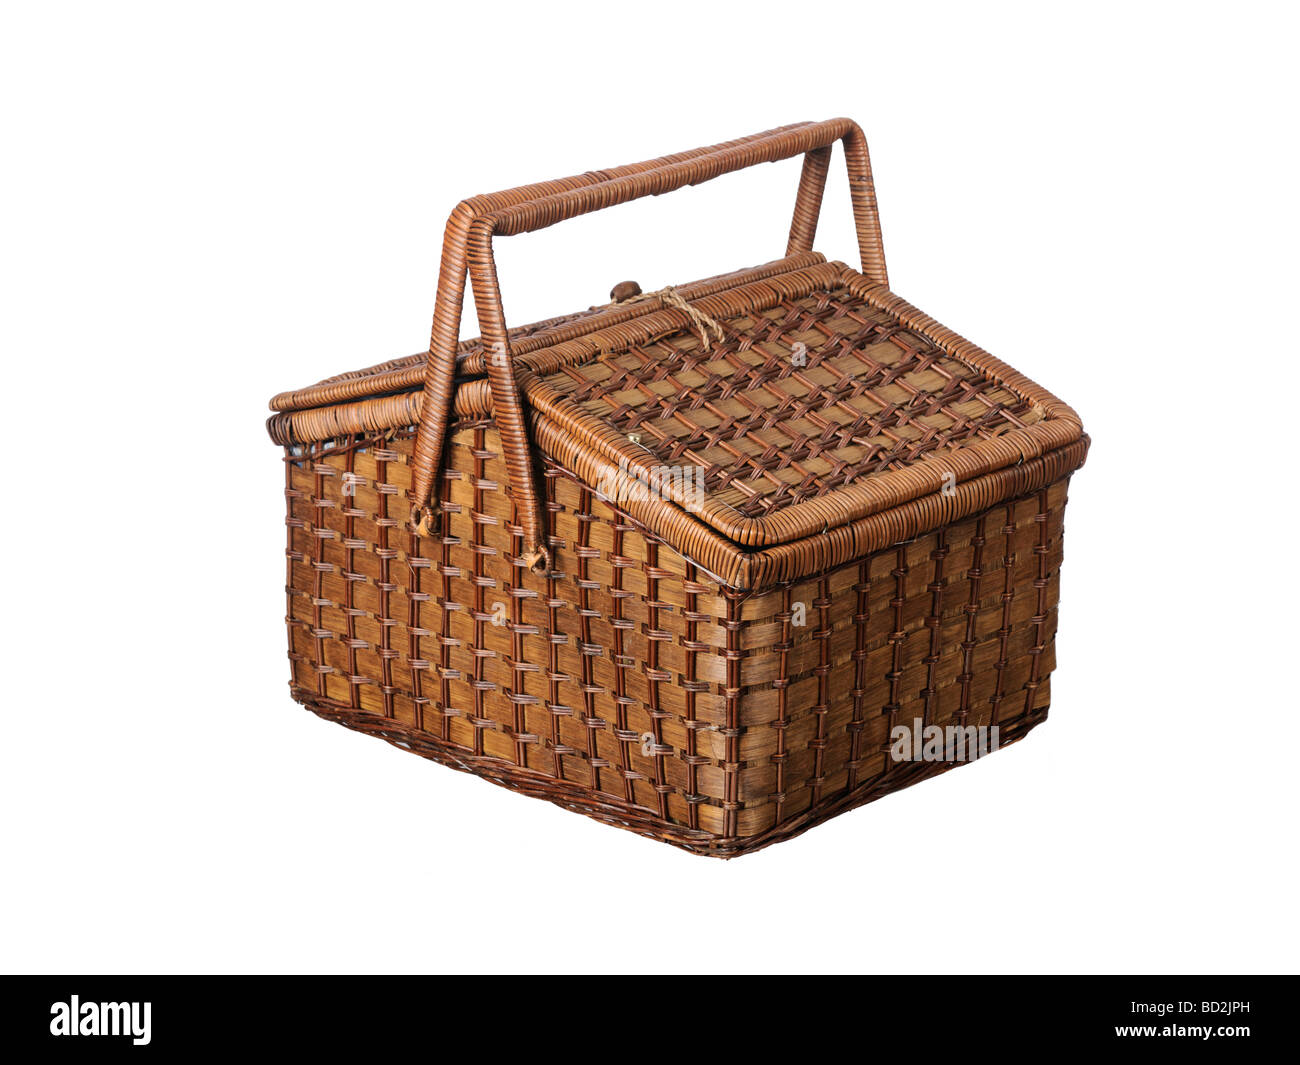 Traditional Picnic basket Stock Photo